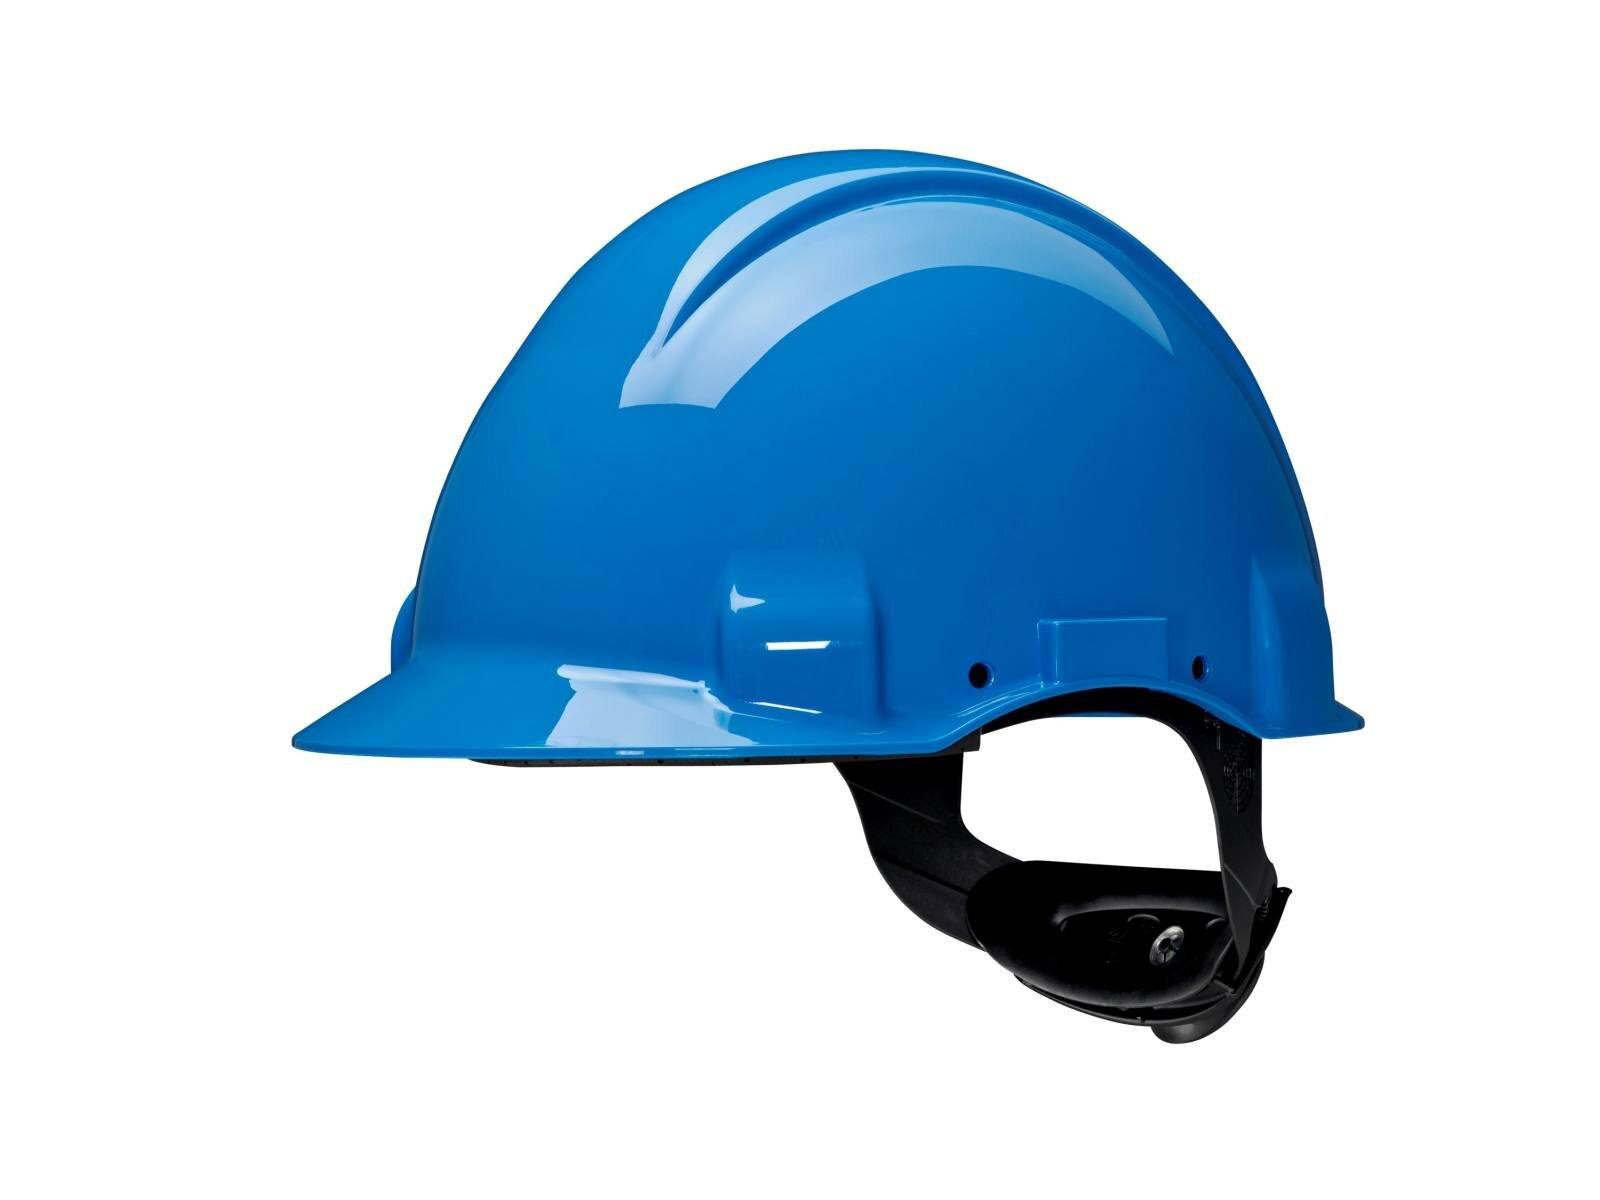 3M Safety helmet, Uvicator, pinlock fastener, non-ventilated, dielectric 440 V, plastic sweatband, blue, G3001CUV-BB